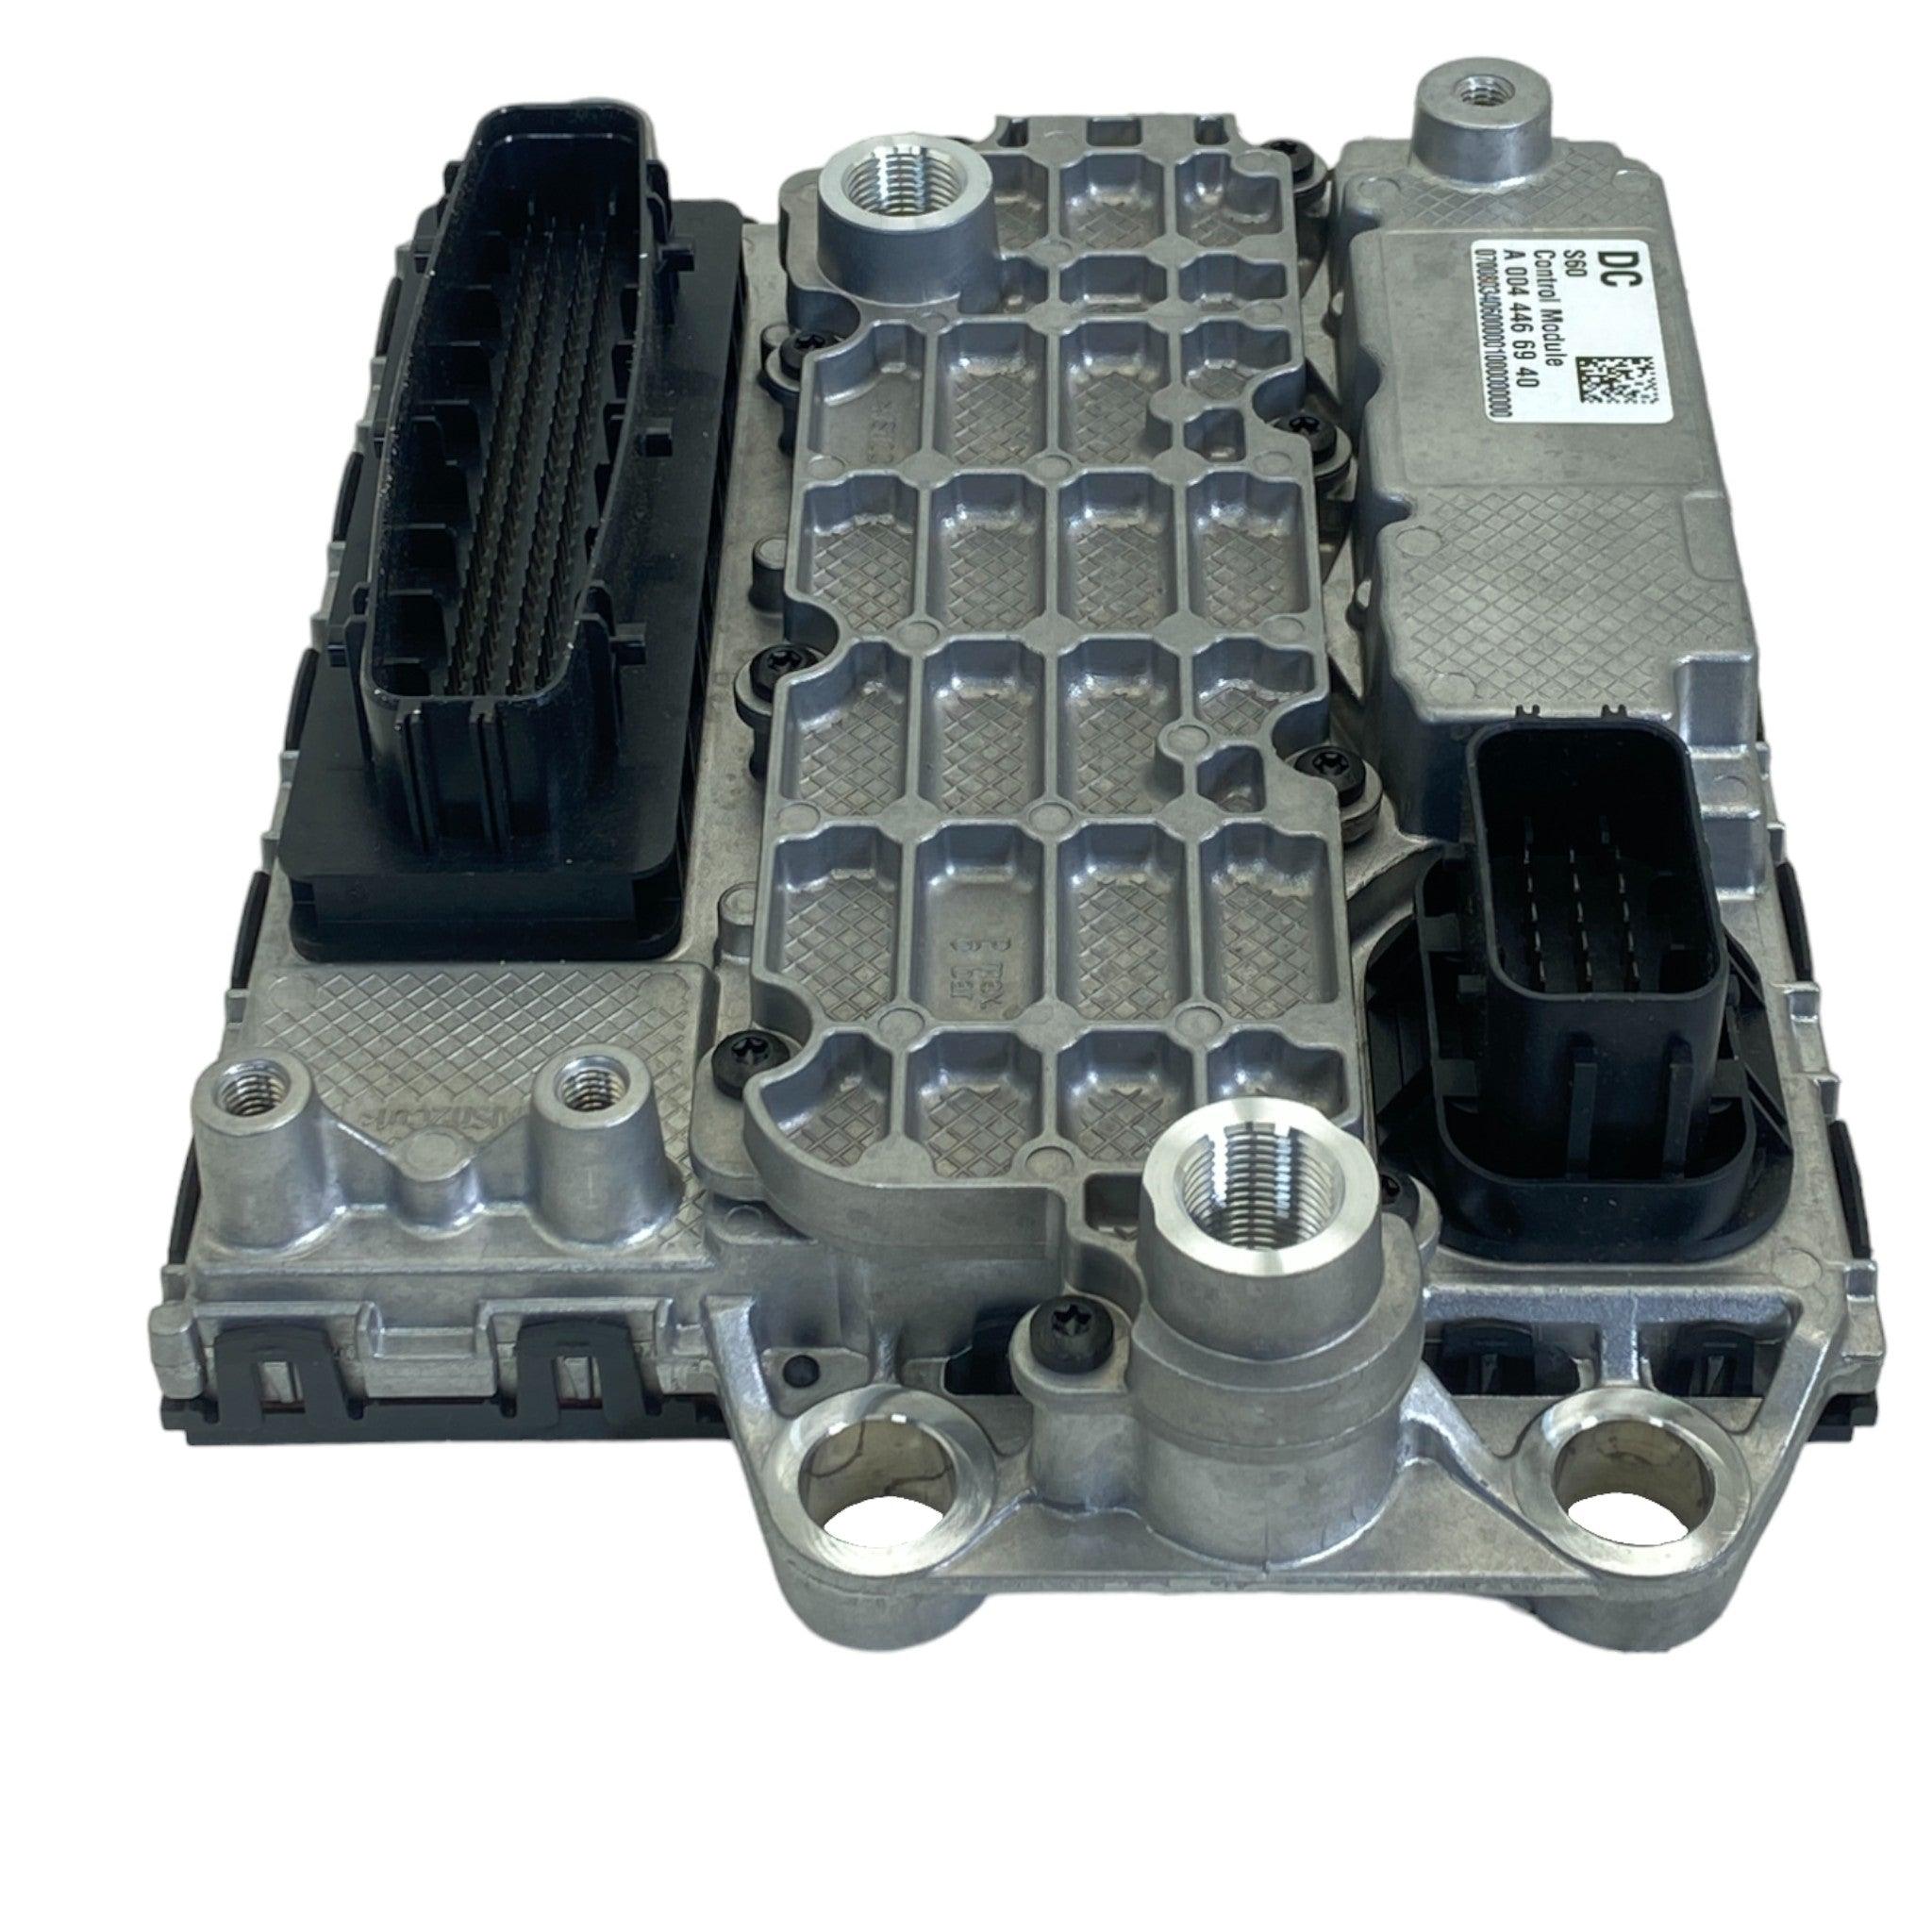 Ra0054467840 Genuine Detroit Diesel® Engine Control Unit Mcm 1.0 S60 Epa07 12V Fuel Cooled - ADVANCED TRUCK PARTS